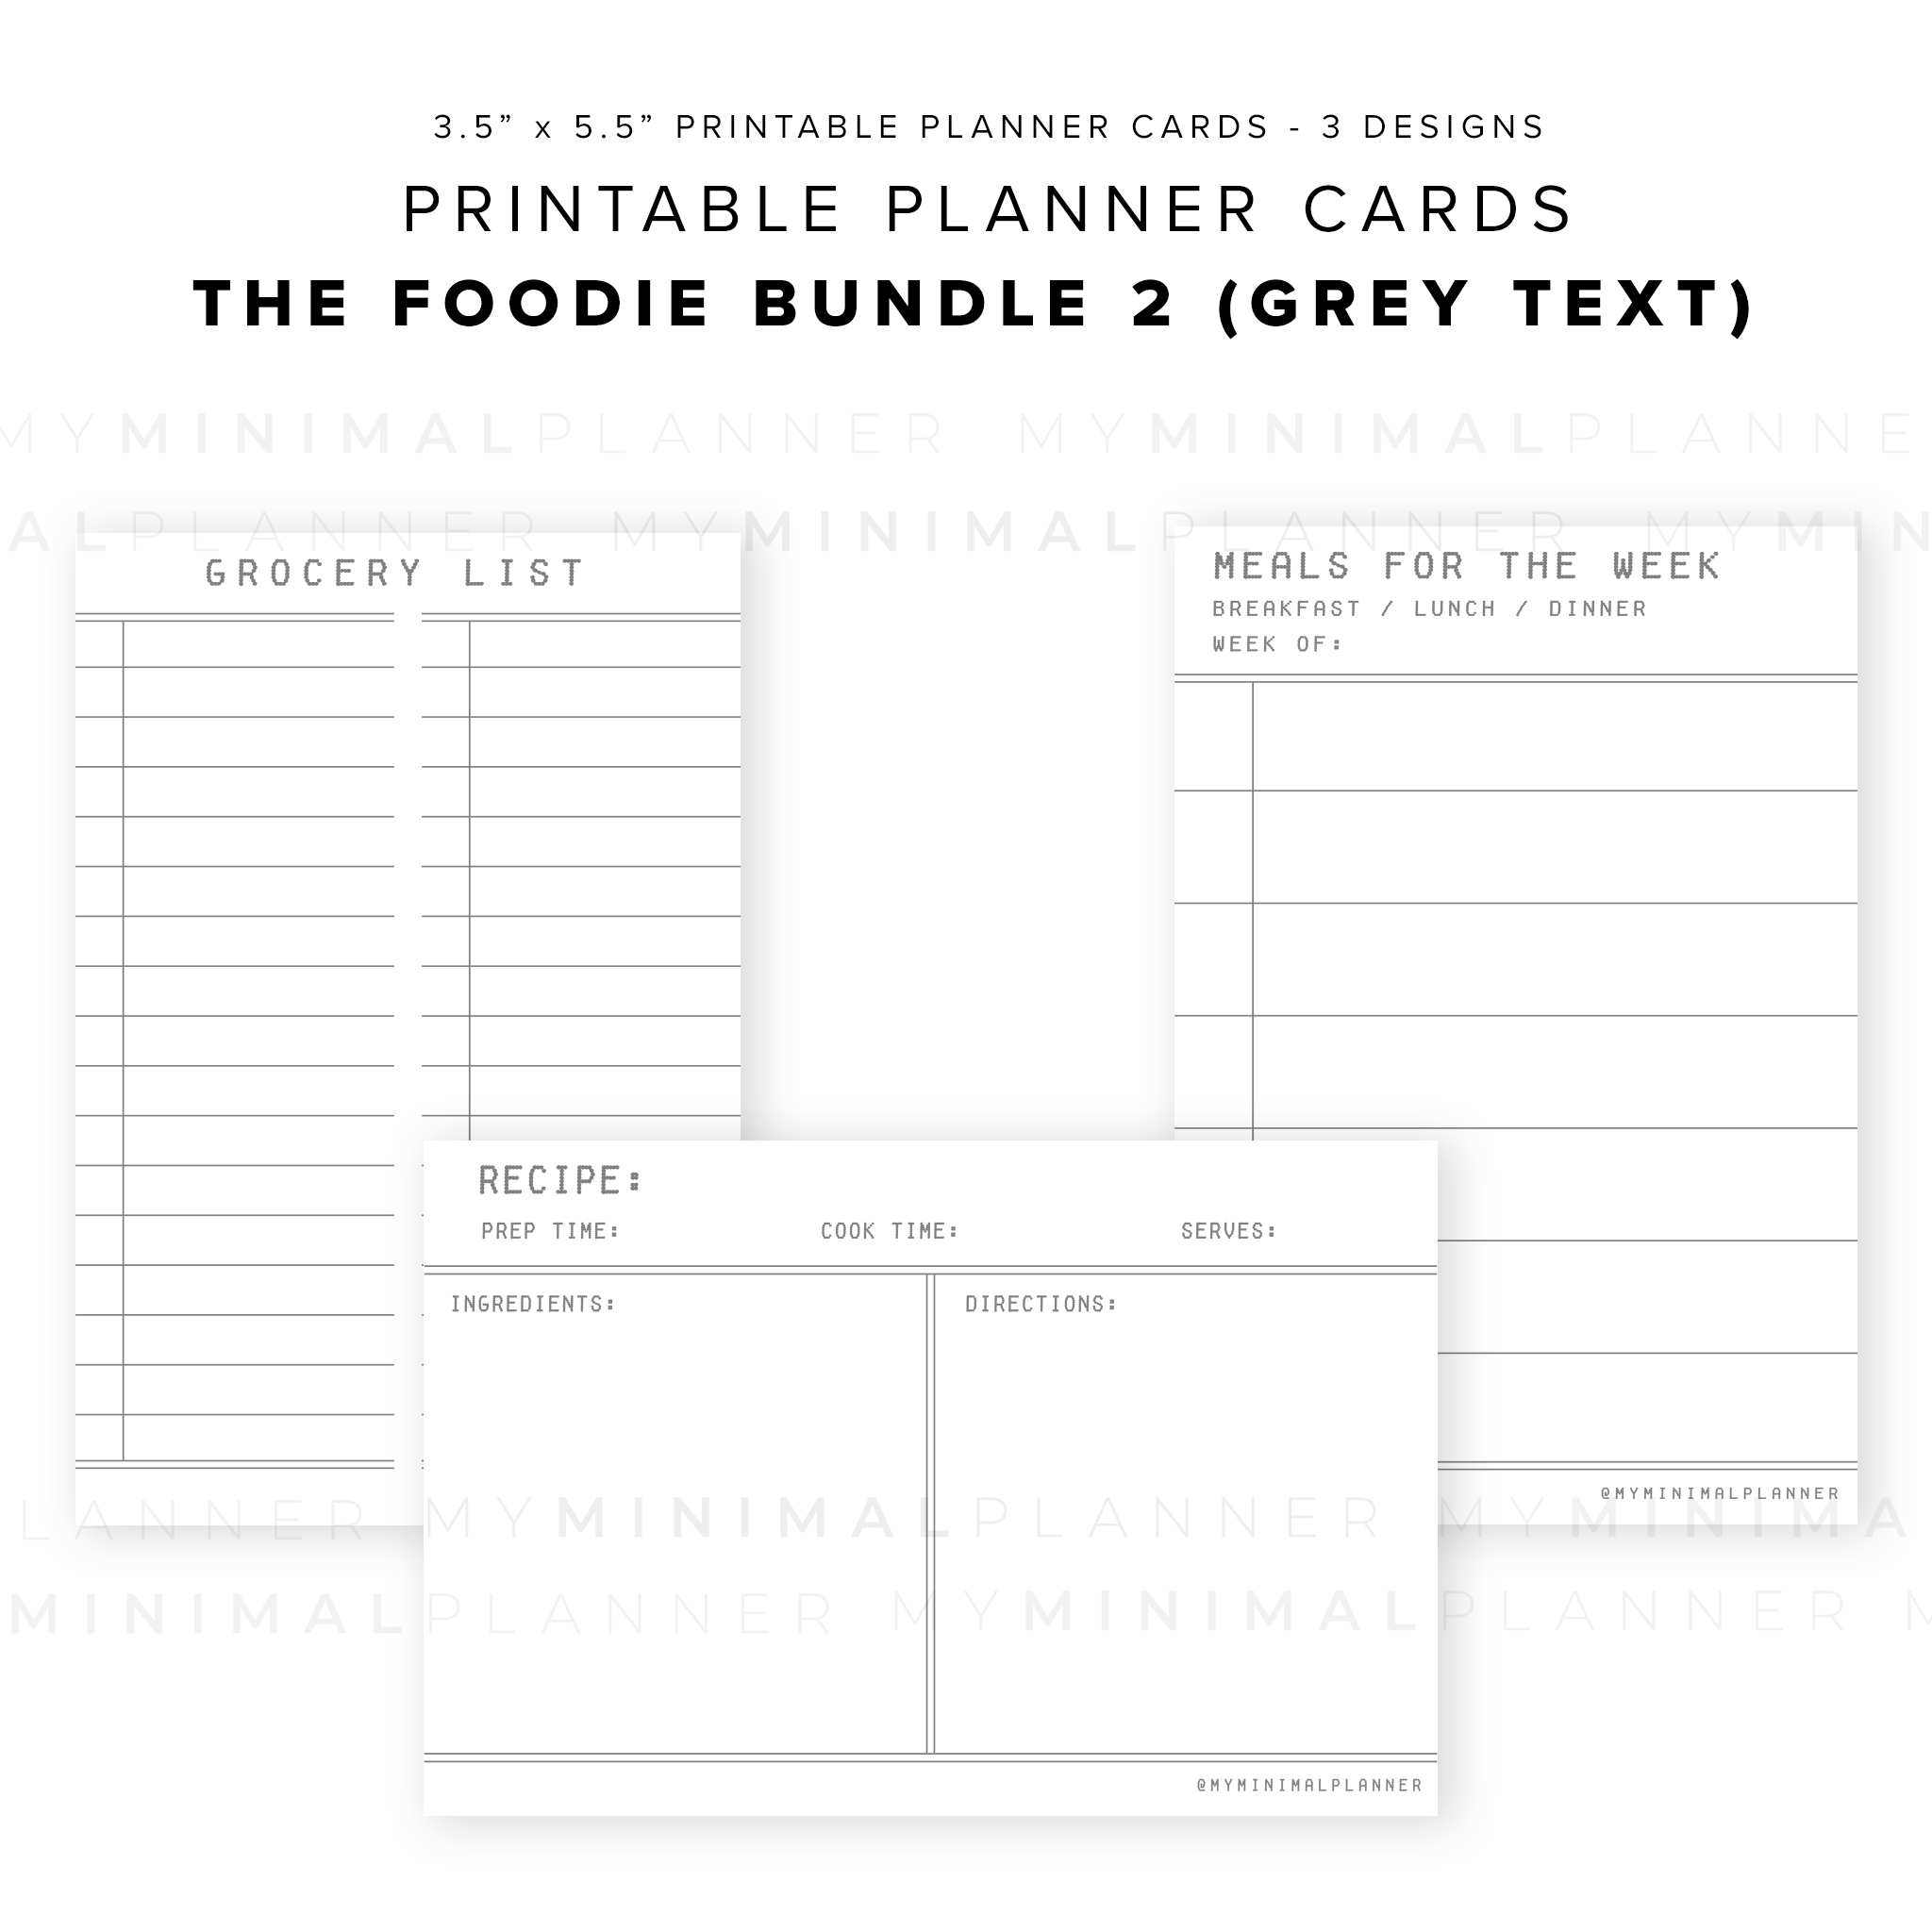 PPC15 - The Foodie Bundle 1 - Printable Planner Cards